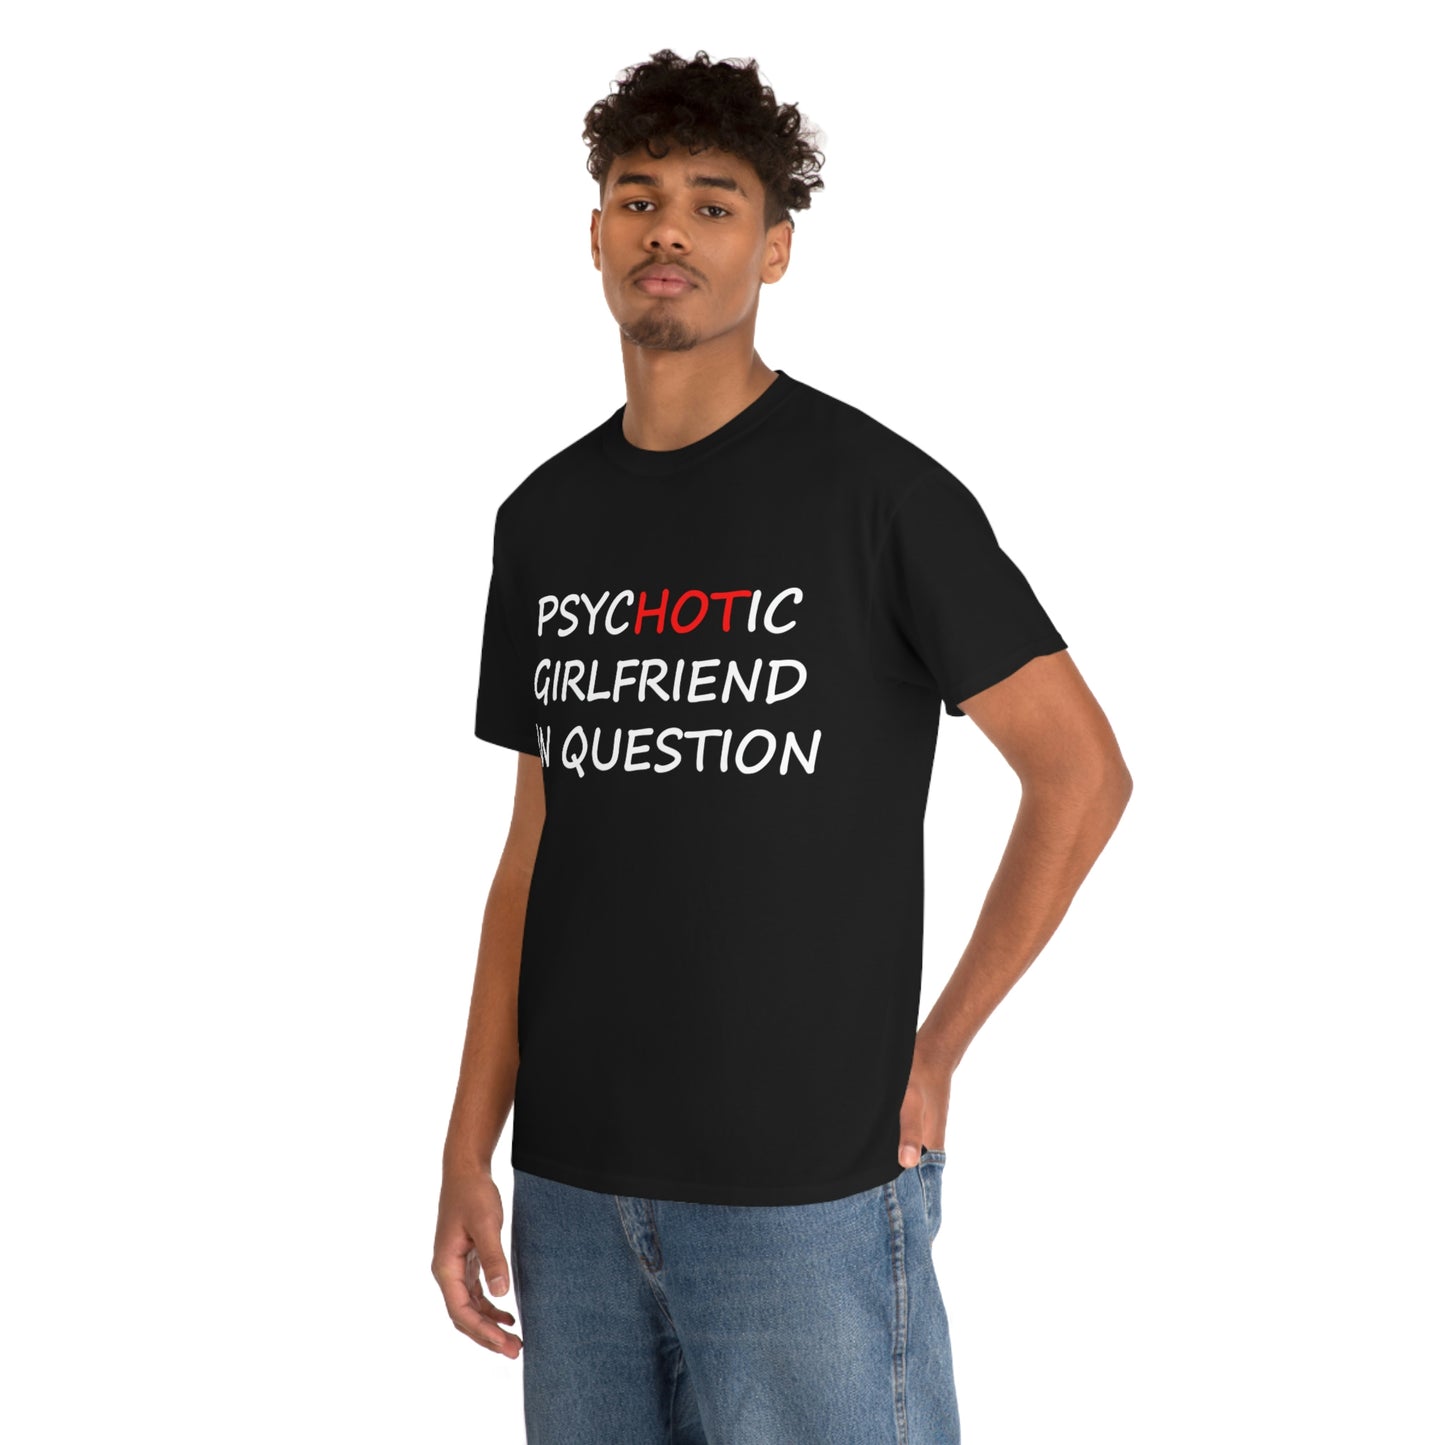 Girlfriend in question Tshirt